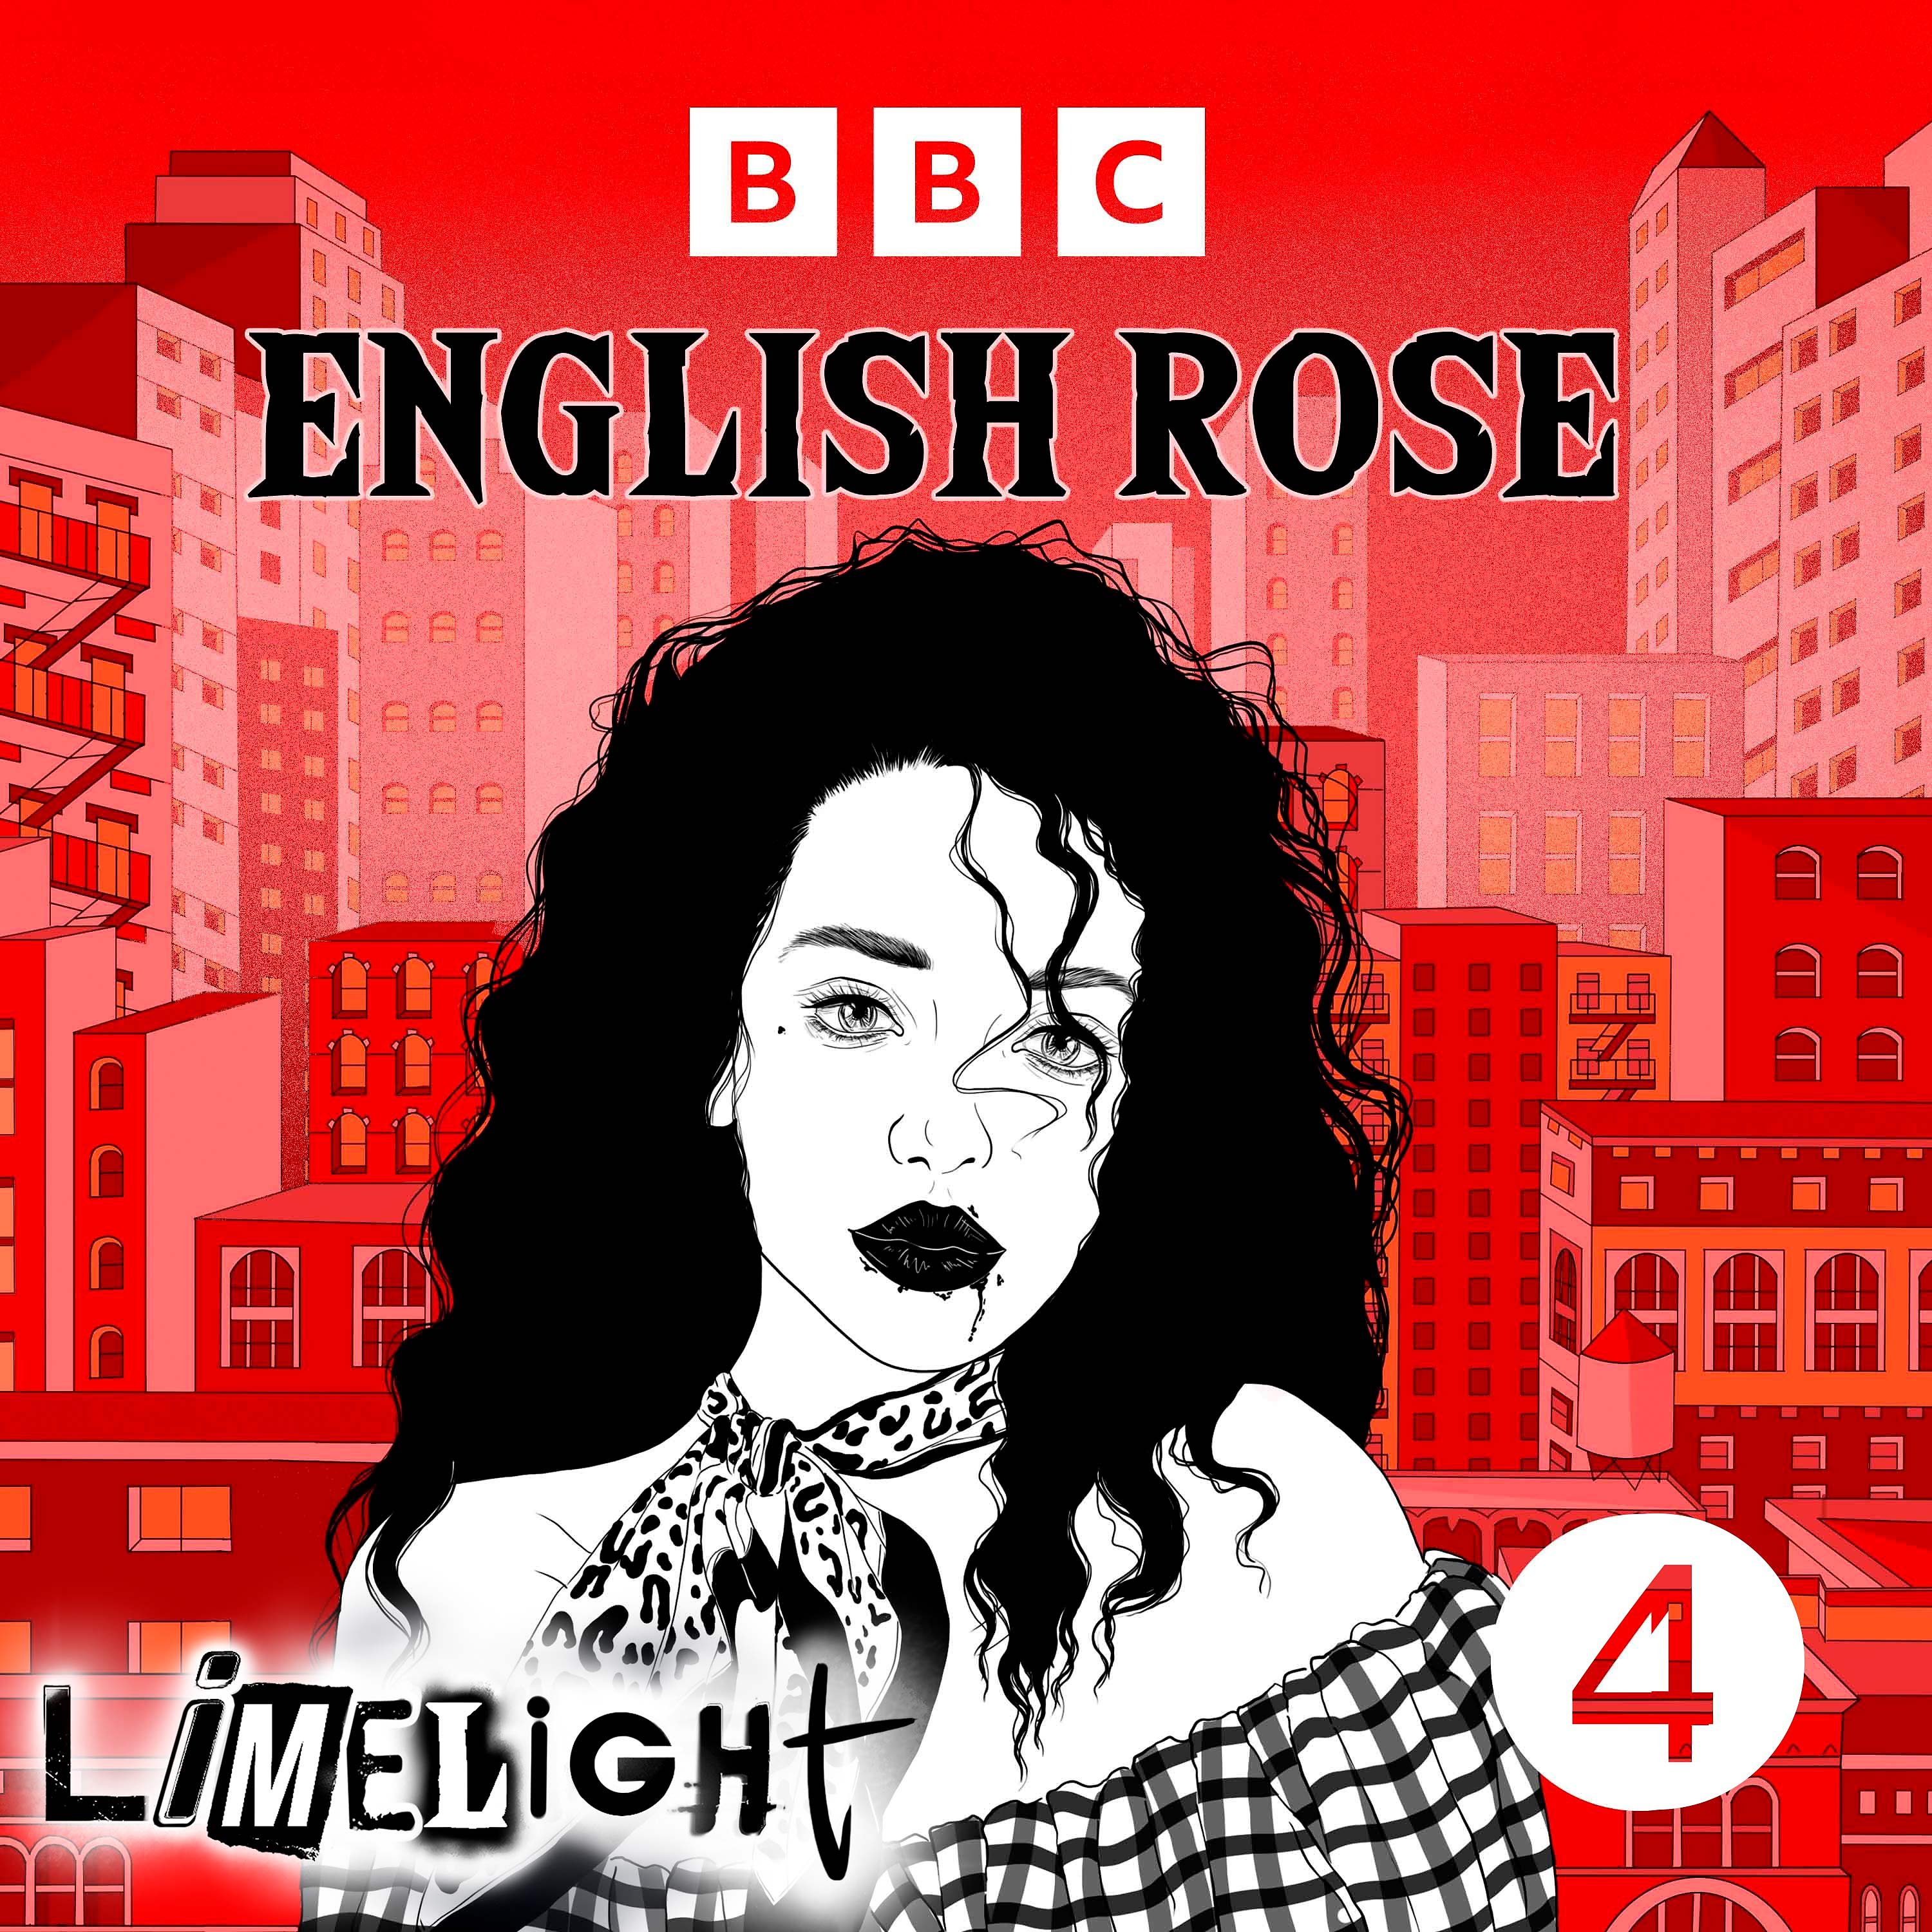 Introducing English Rose